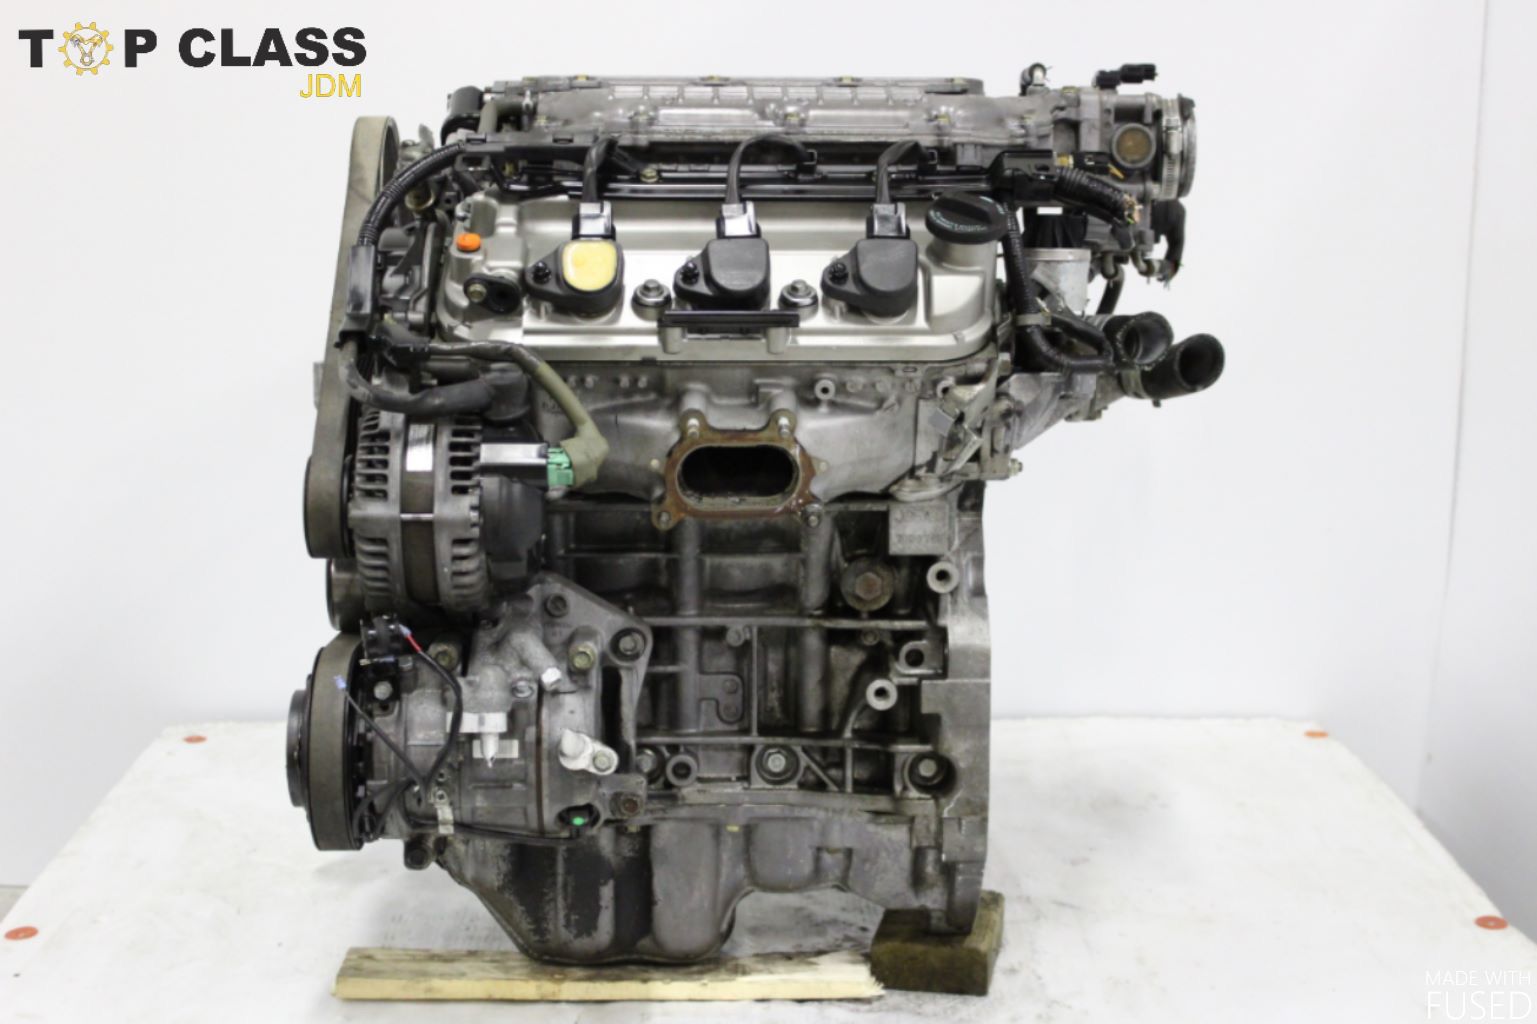 05 06 07 08 Honda Pilot MDX ODYSSEY Ridgeline Engine J35A SOHC i-Vtec 3.5L Acura RL Motor